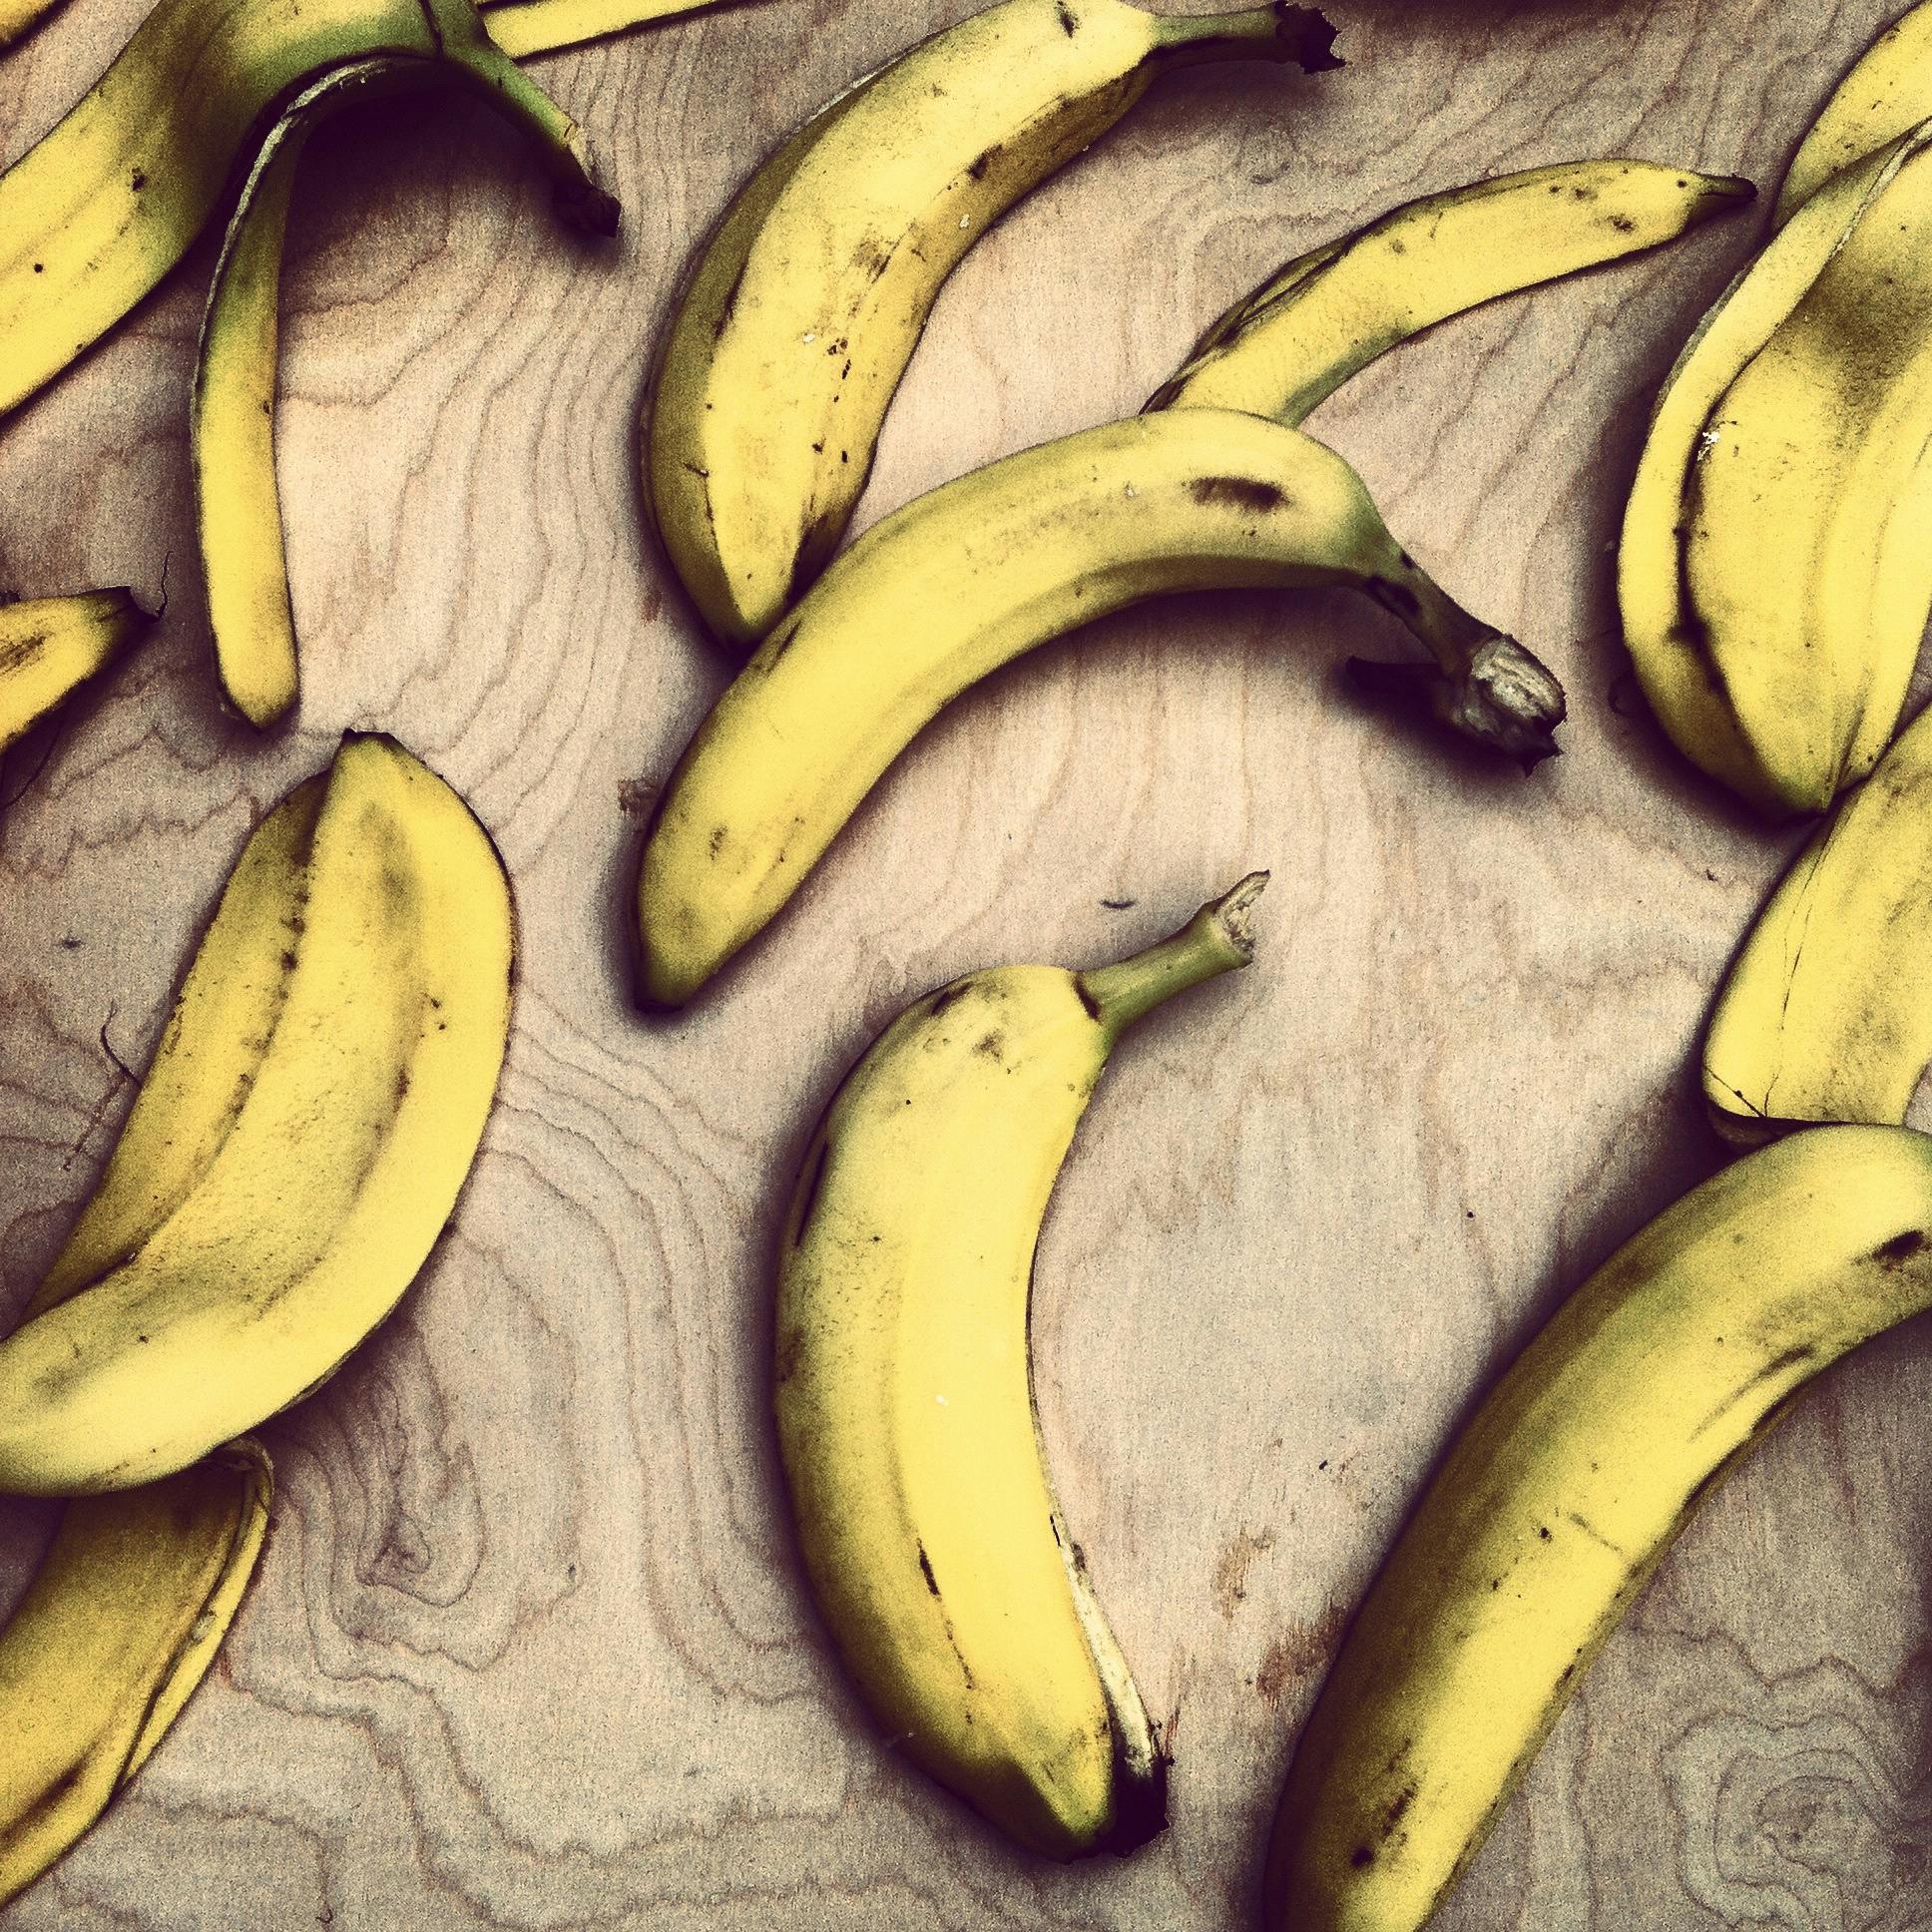 Kostenloses Foto zum Thema: bananen